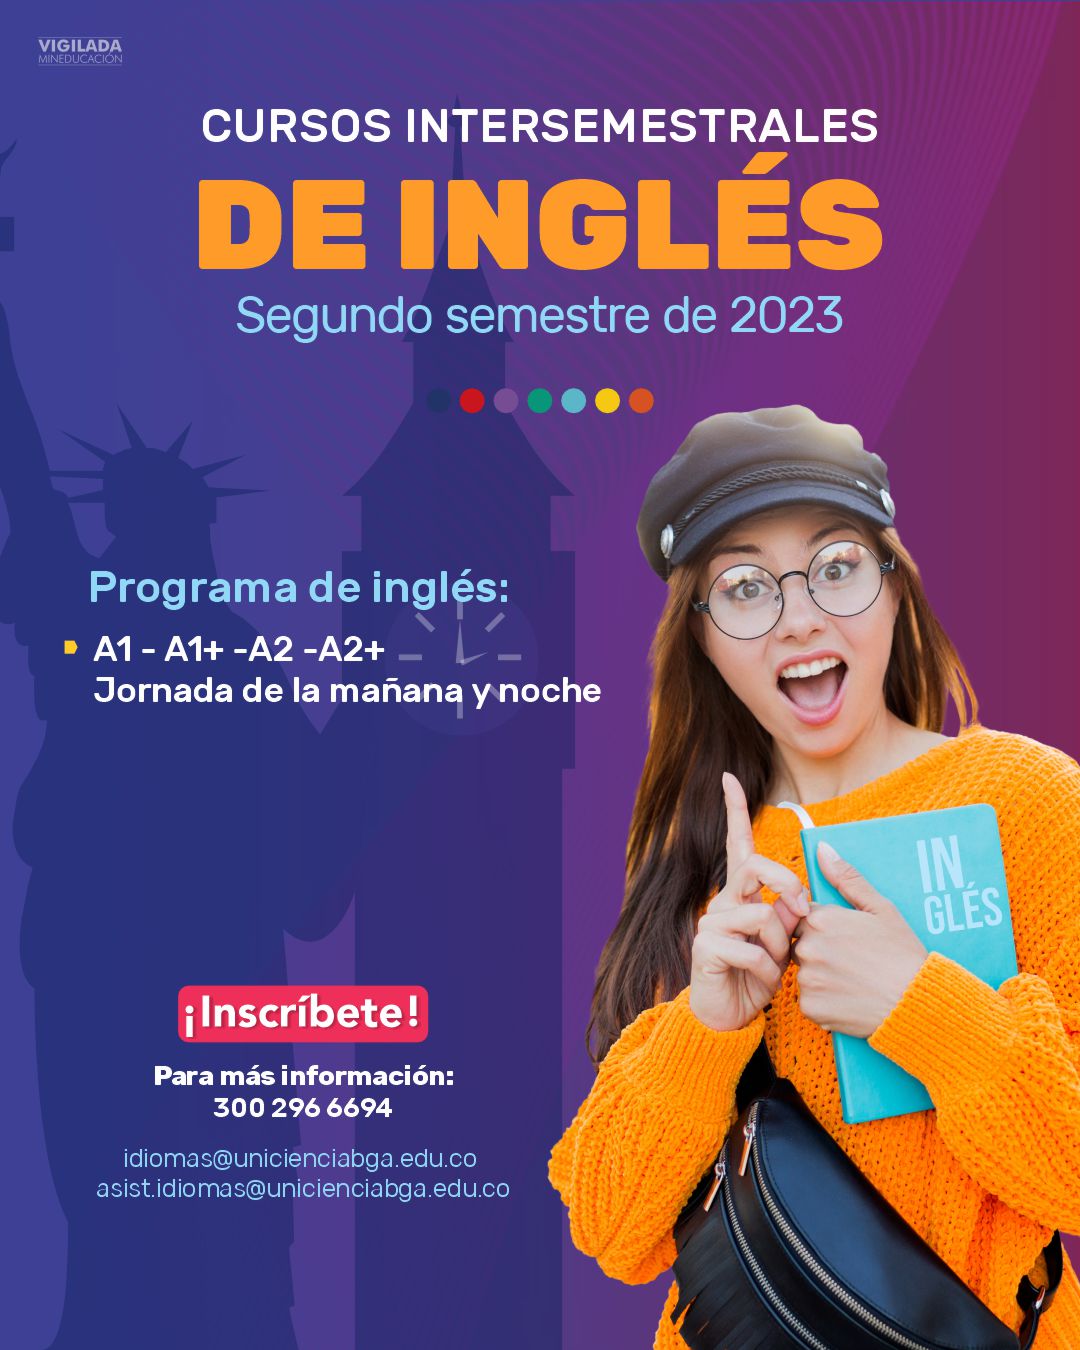 Cursos Intersemestrales de inglés - segundo semestre 2023 | UNICIENCIA 